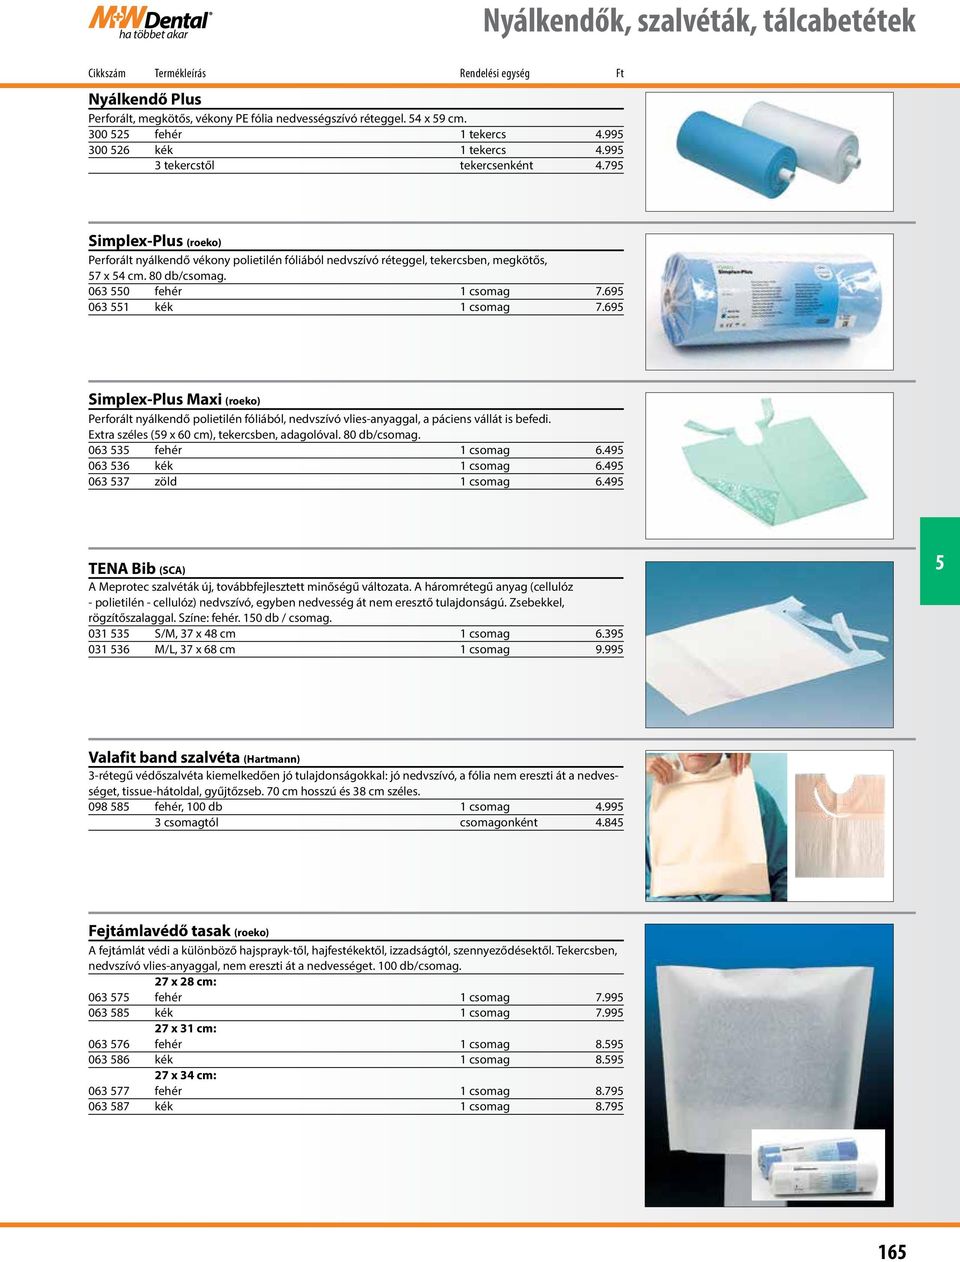 M+W nyálszívók 179. oldal. M+W Medical Sensitive nitril kesztyű 157. oldal.  M+W Plastiject Plus - PDF Free Download